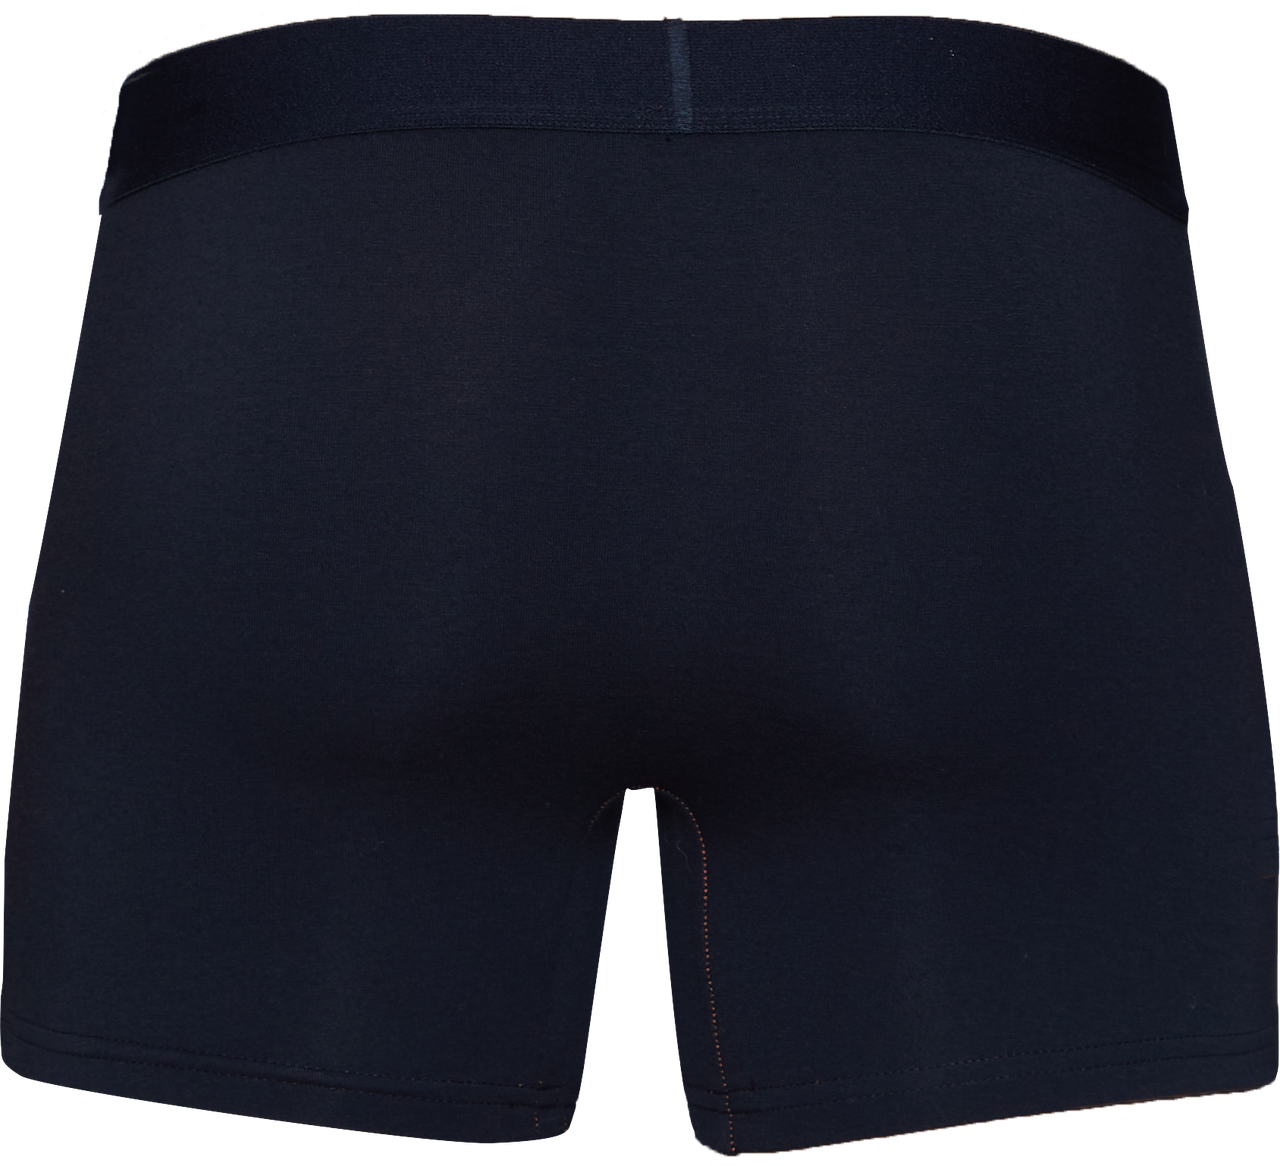 Boxer Brief w/ Fly in Black by Wood Underwear